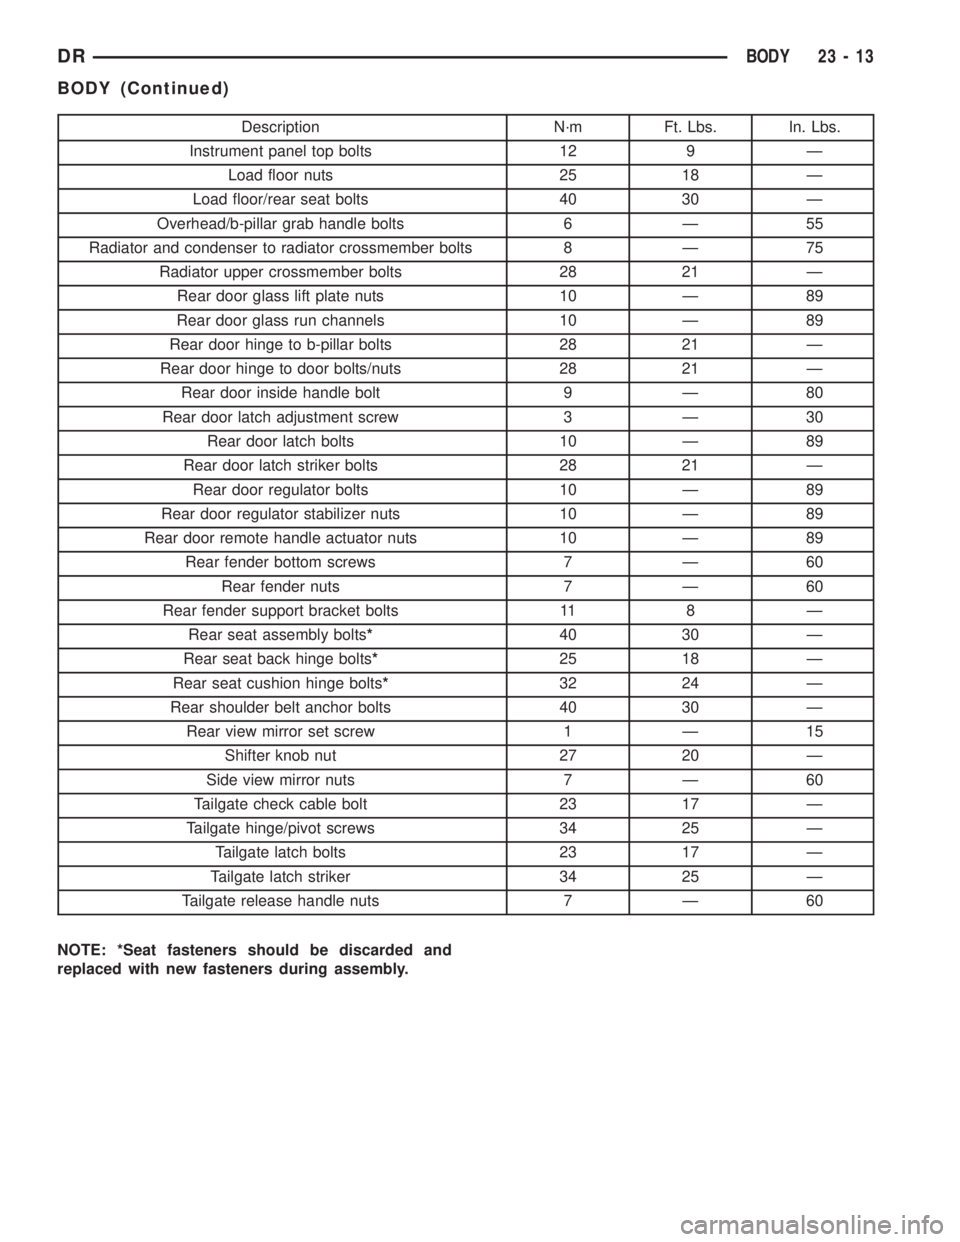 DODGE RAM 2003  Service Repair Manual Description N´m Ft. Lbs. In. Lbs.
Instrument panel top bolts 12 9 Ð
Load floor nuts 25 18 Ð
Load floor/rear seat bolts 40 30 Ð
Overhead/b-pillar grab handle bolts 6 Ð 55
Radiator and condenser to